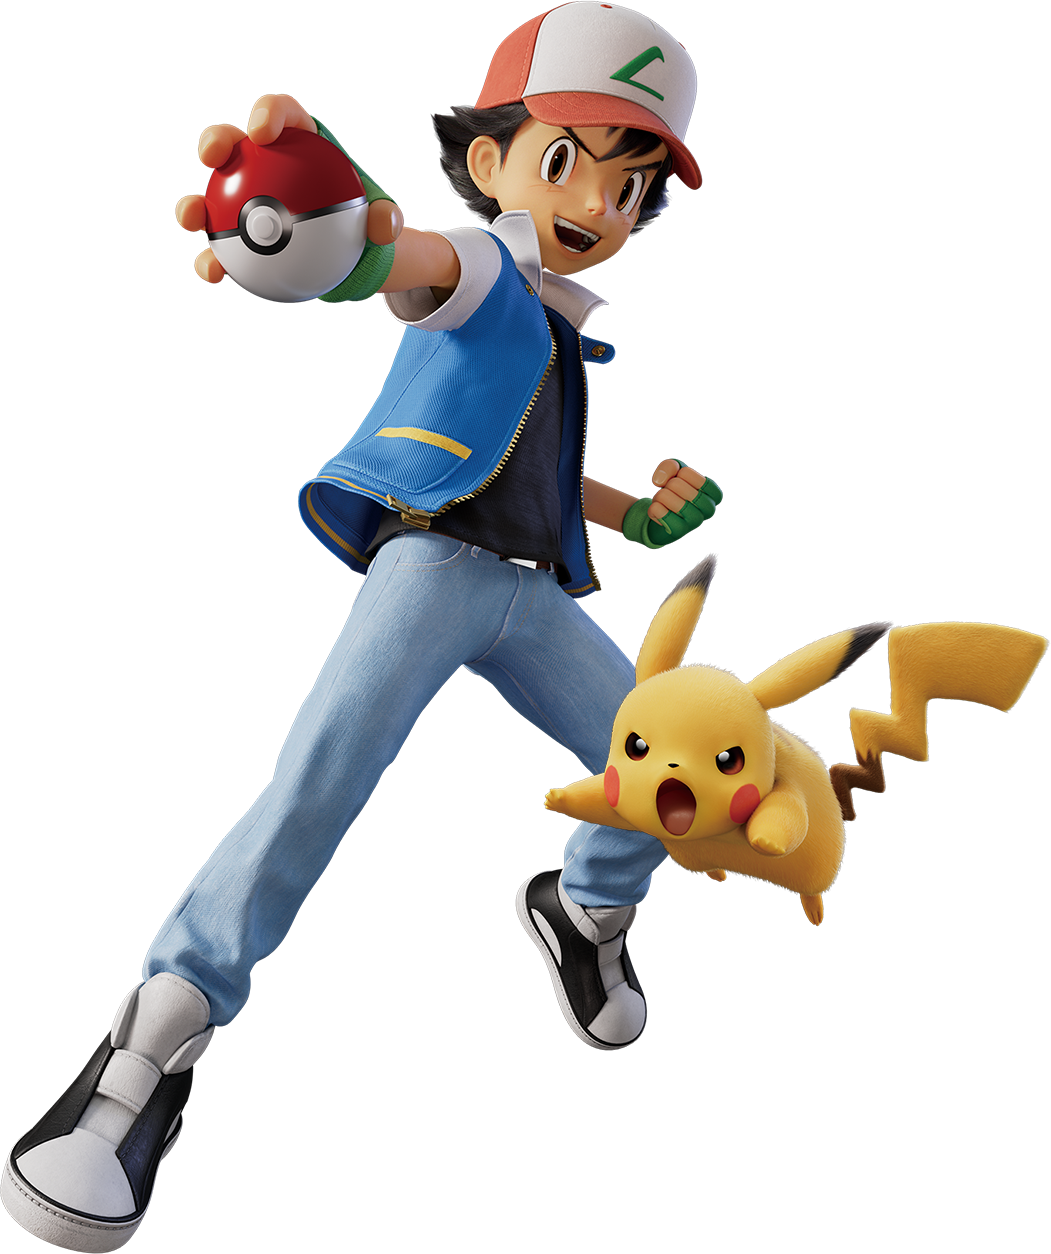 Pokémon: Johto League Champions - Wikipedia